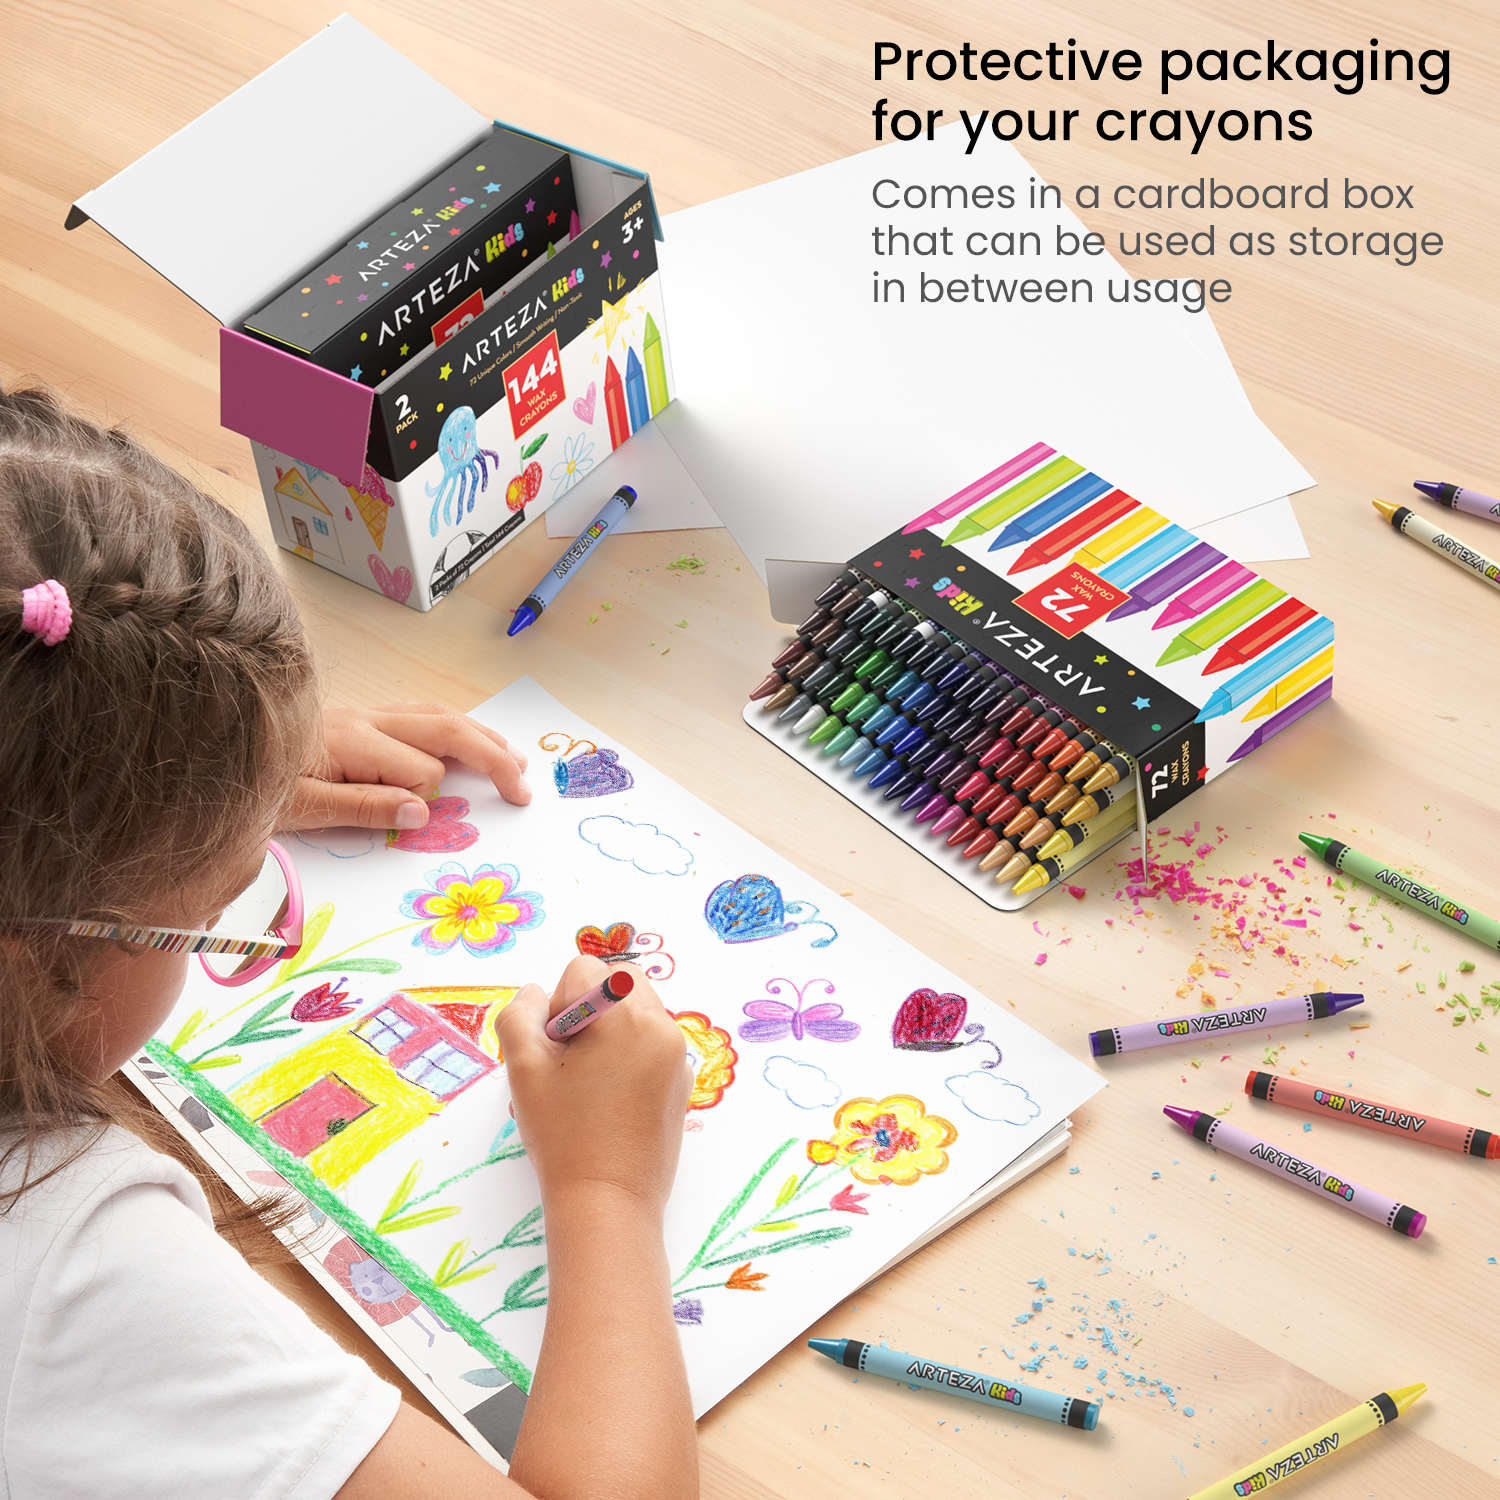 Arteza Kids Wax Crayons, 72 Pieces - 2 Pack